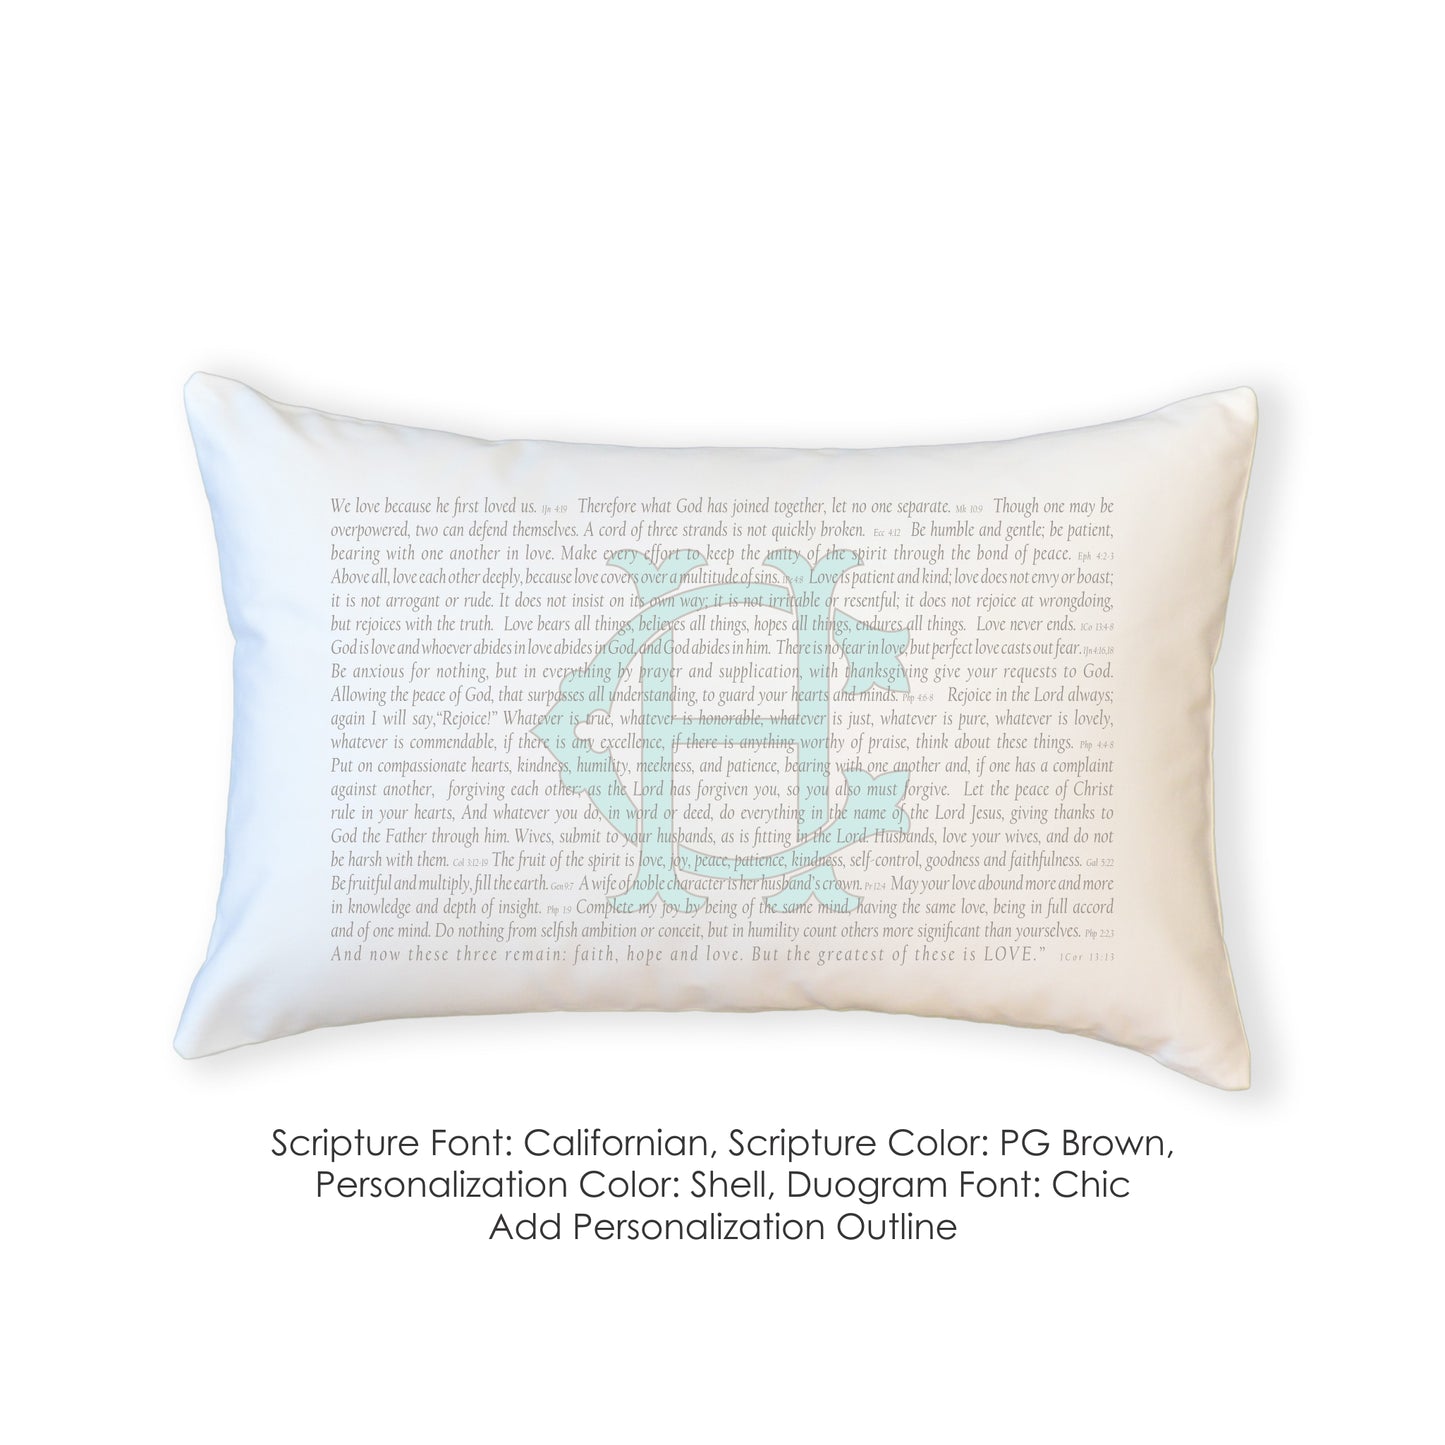 Scripture for Love & Marriage - Boudoir Pillow